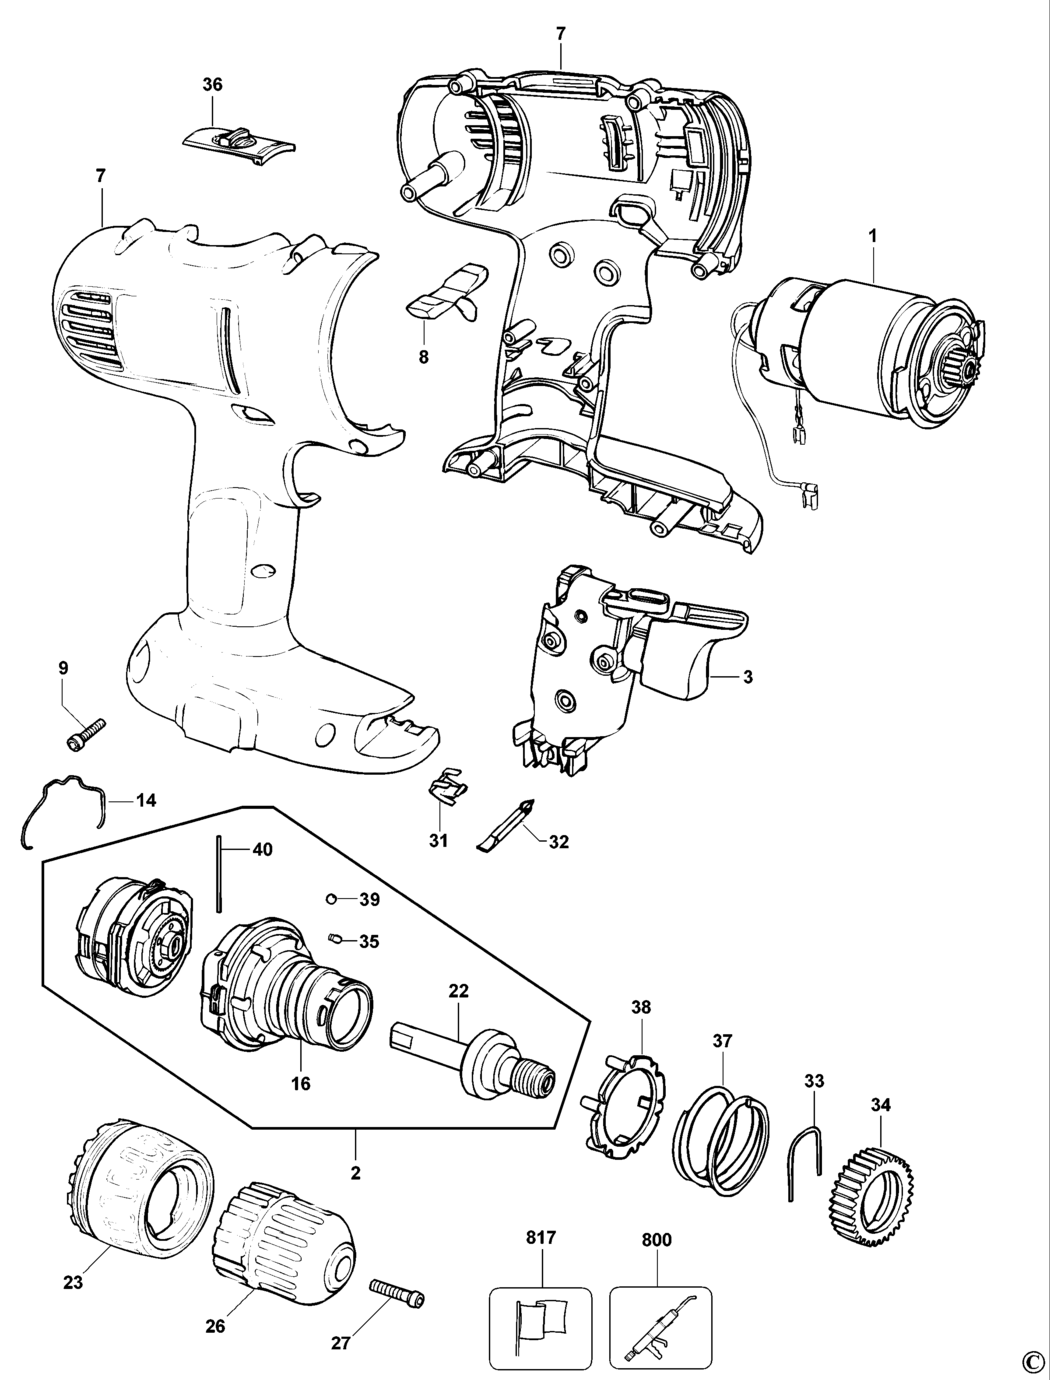 Dewalt DW928 Type 11 Cordless Drill Spare Parts